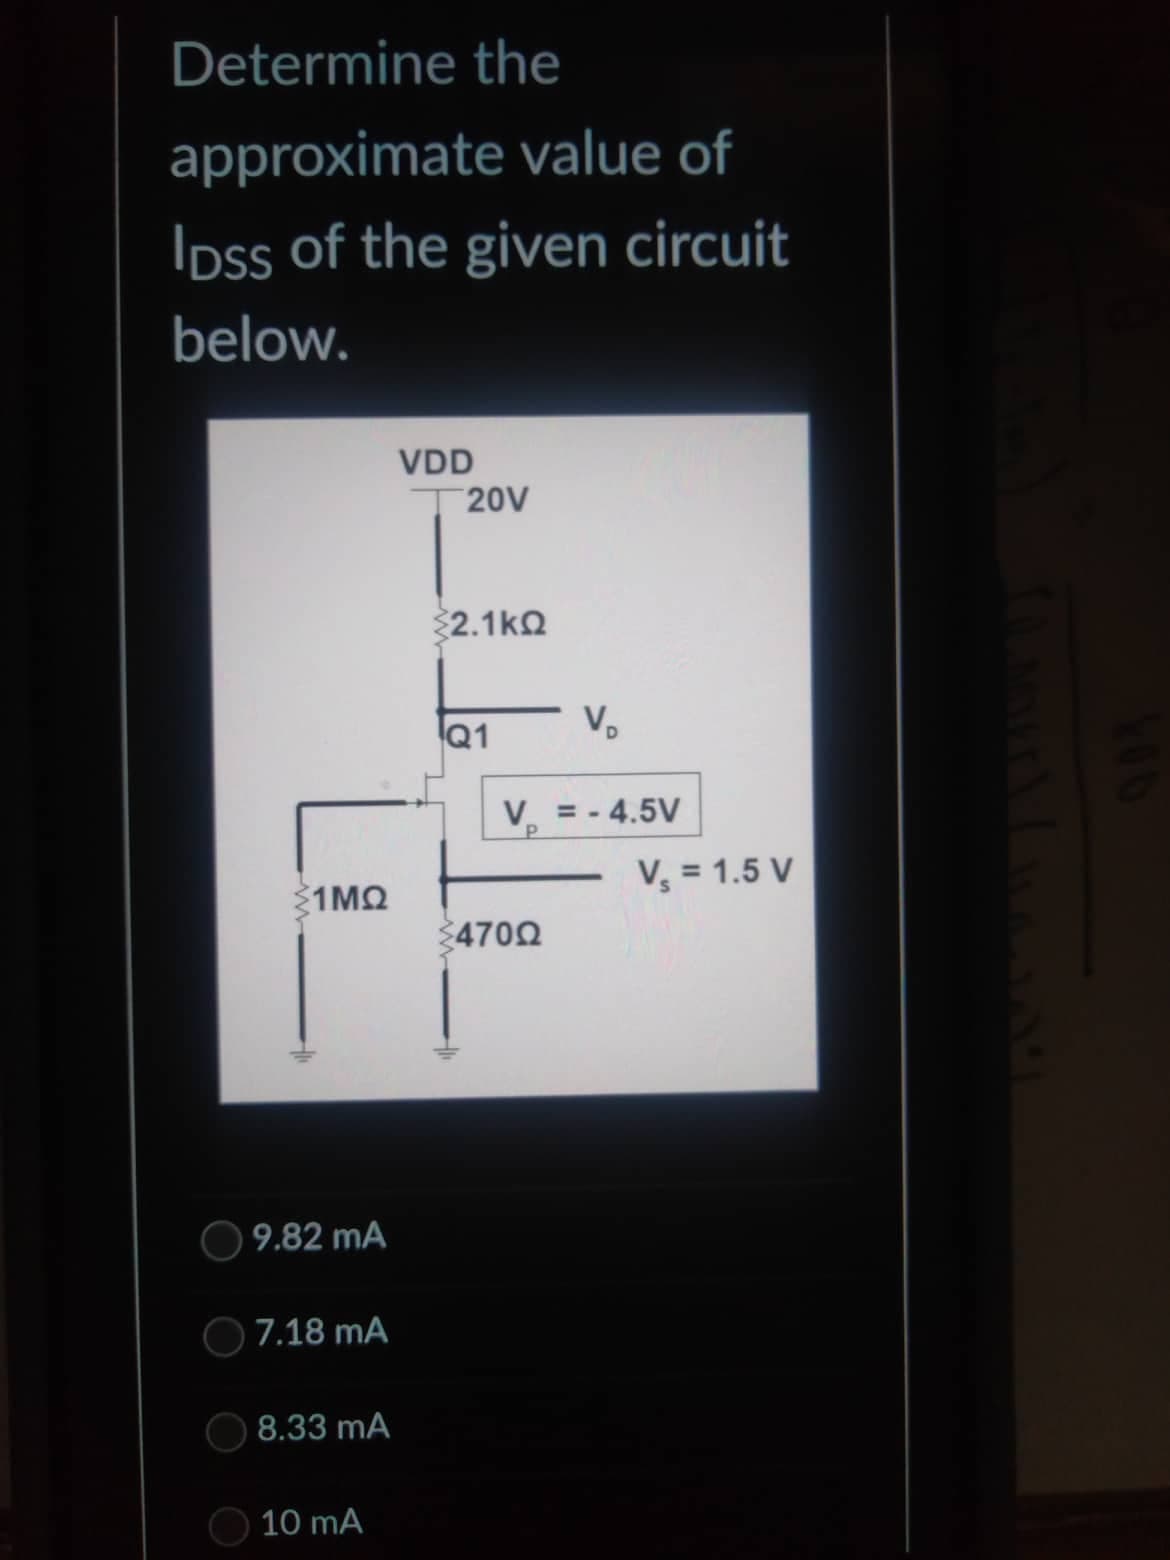 Determine the
approximate value of
IDss of the given circuit
below.
1MQ
9.82 mA
7.18 mA
8.33 mA
10 mA
VDD
20V
22.1kΩ
Q1
V₂
V = -4.5V
P
4700
-
V₂ = 1.5 V